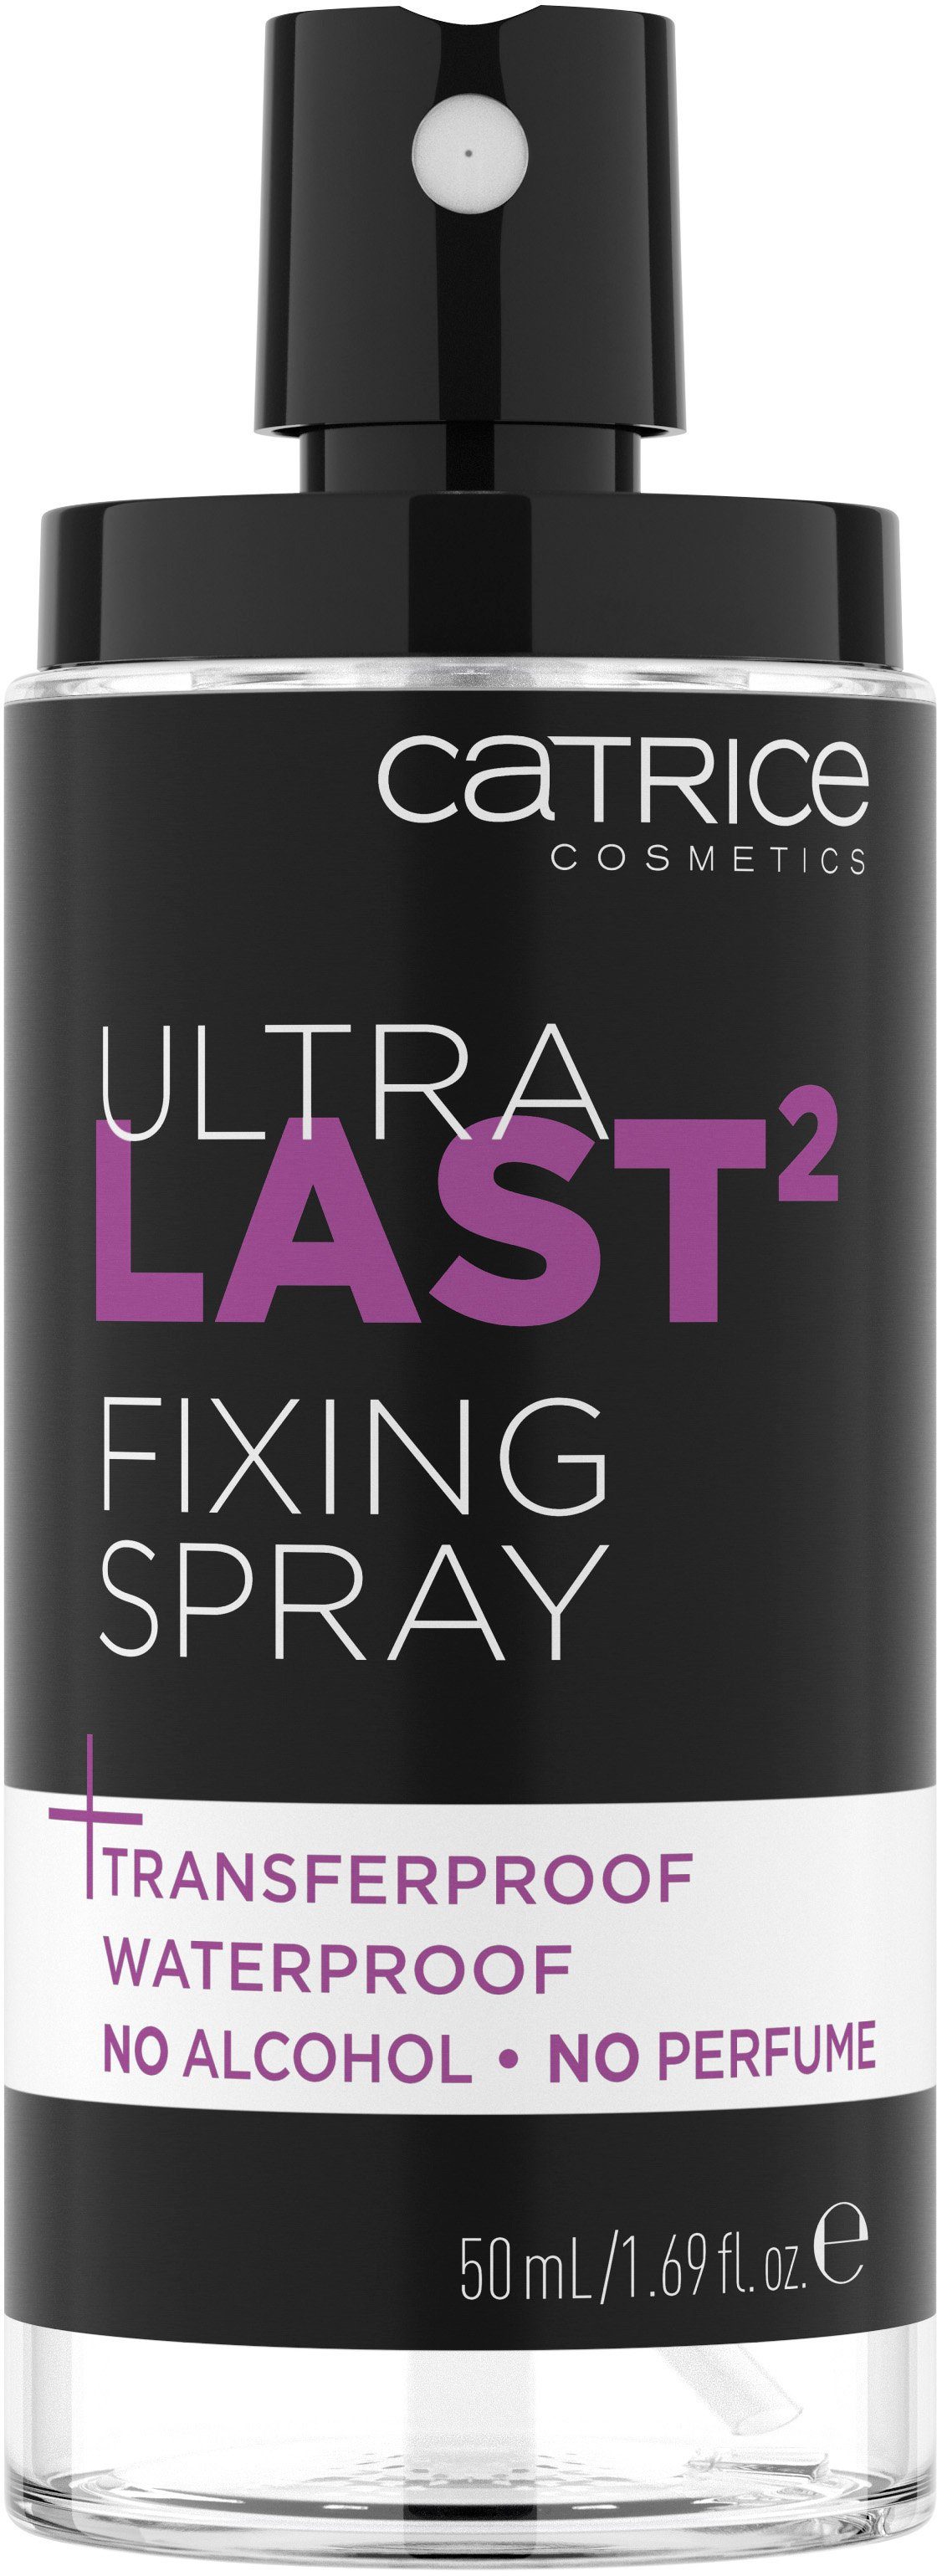 Catrice Ultra Fixierspray Spray, Last2 3-tlg. Fixing